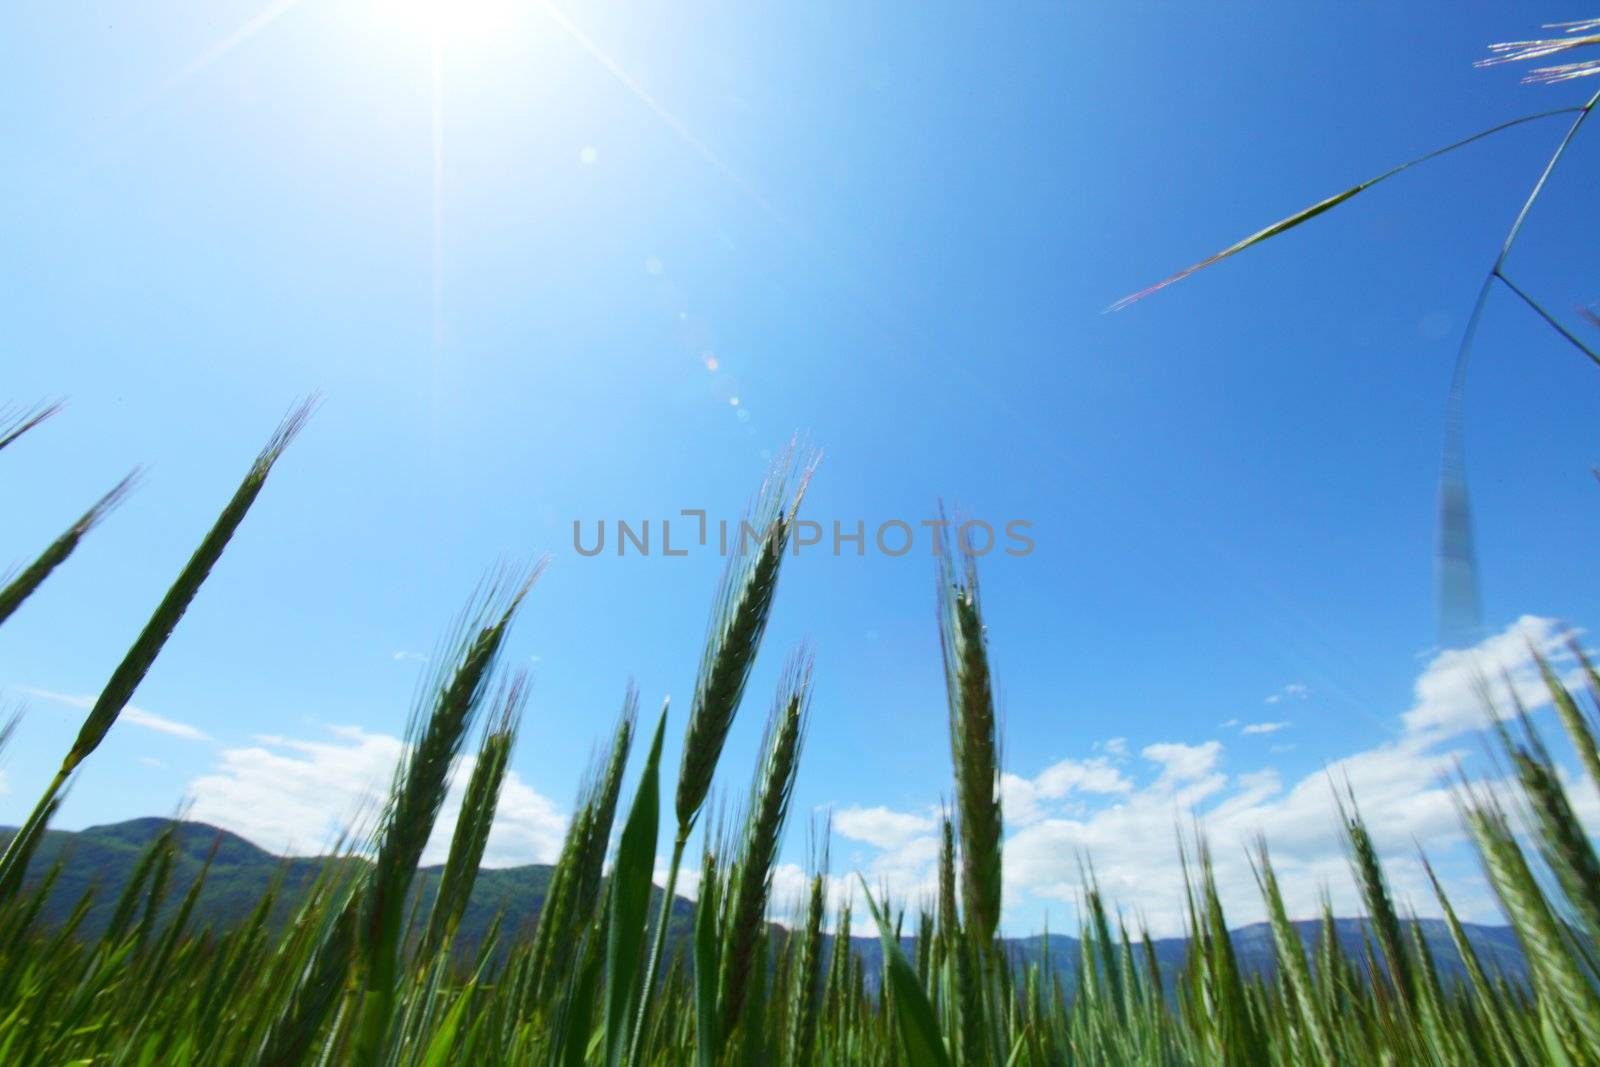 Summer field of wheat